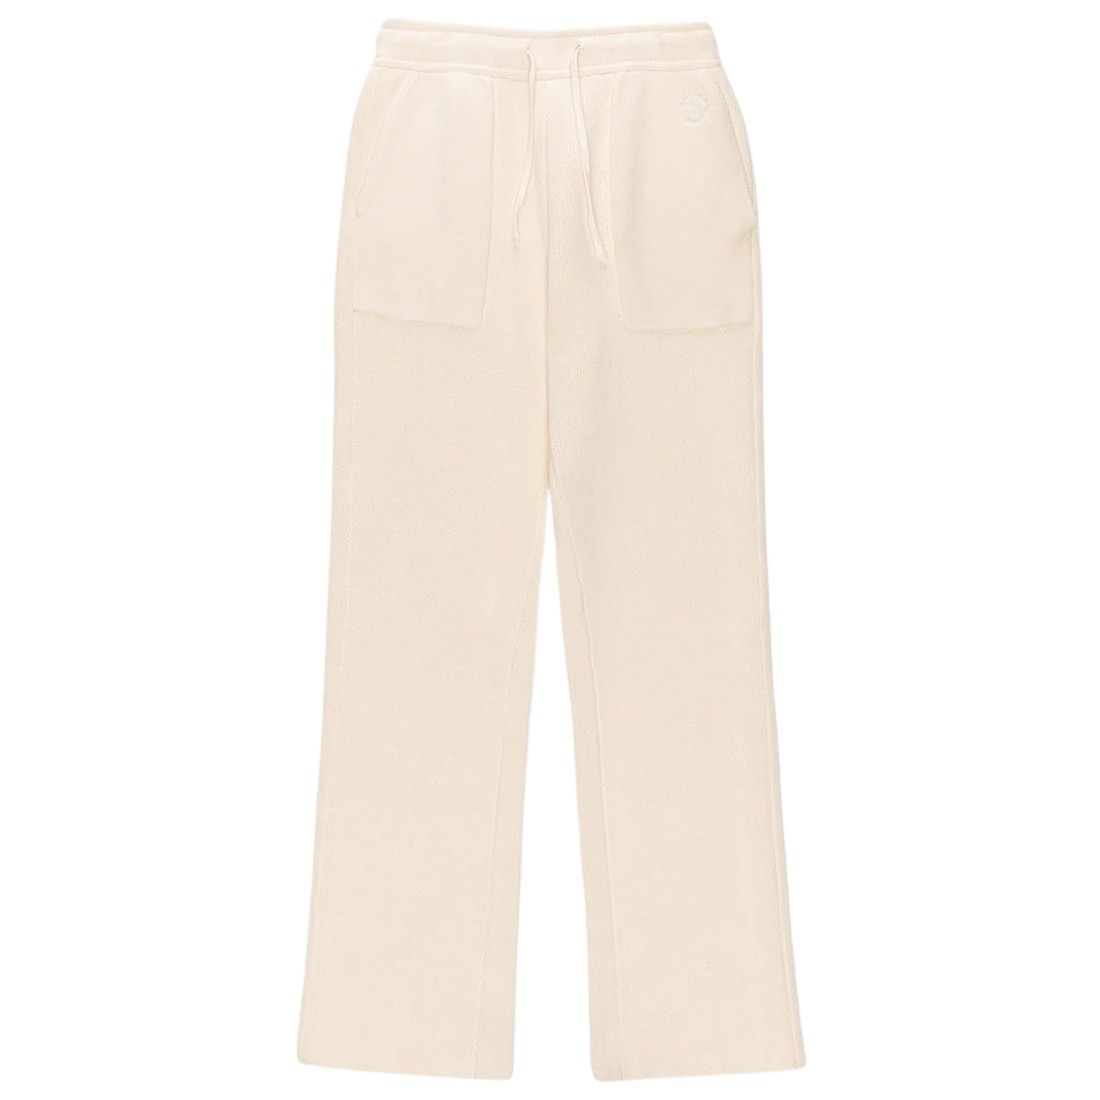 Honor The Gift Women Lounge Pants (white / cream)